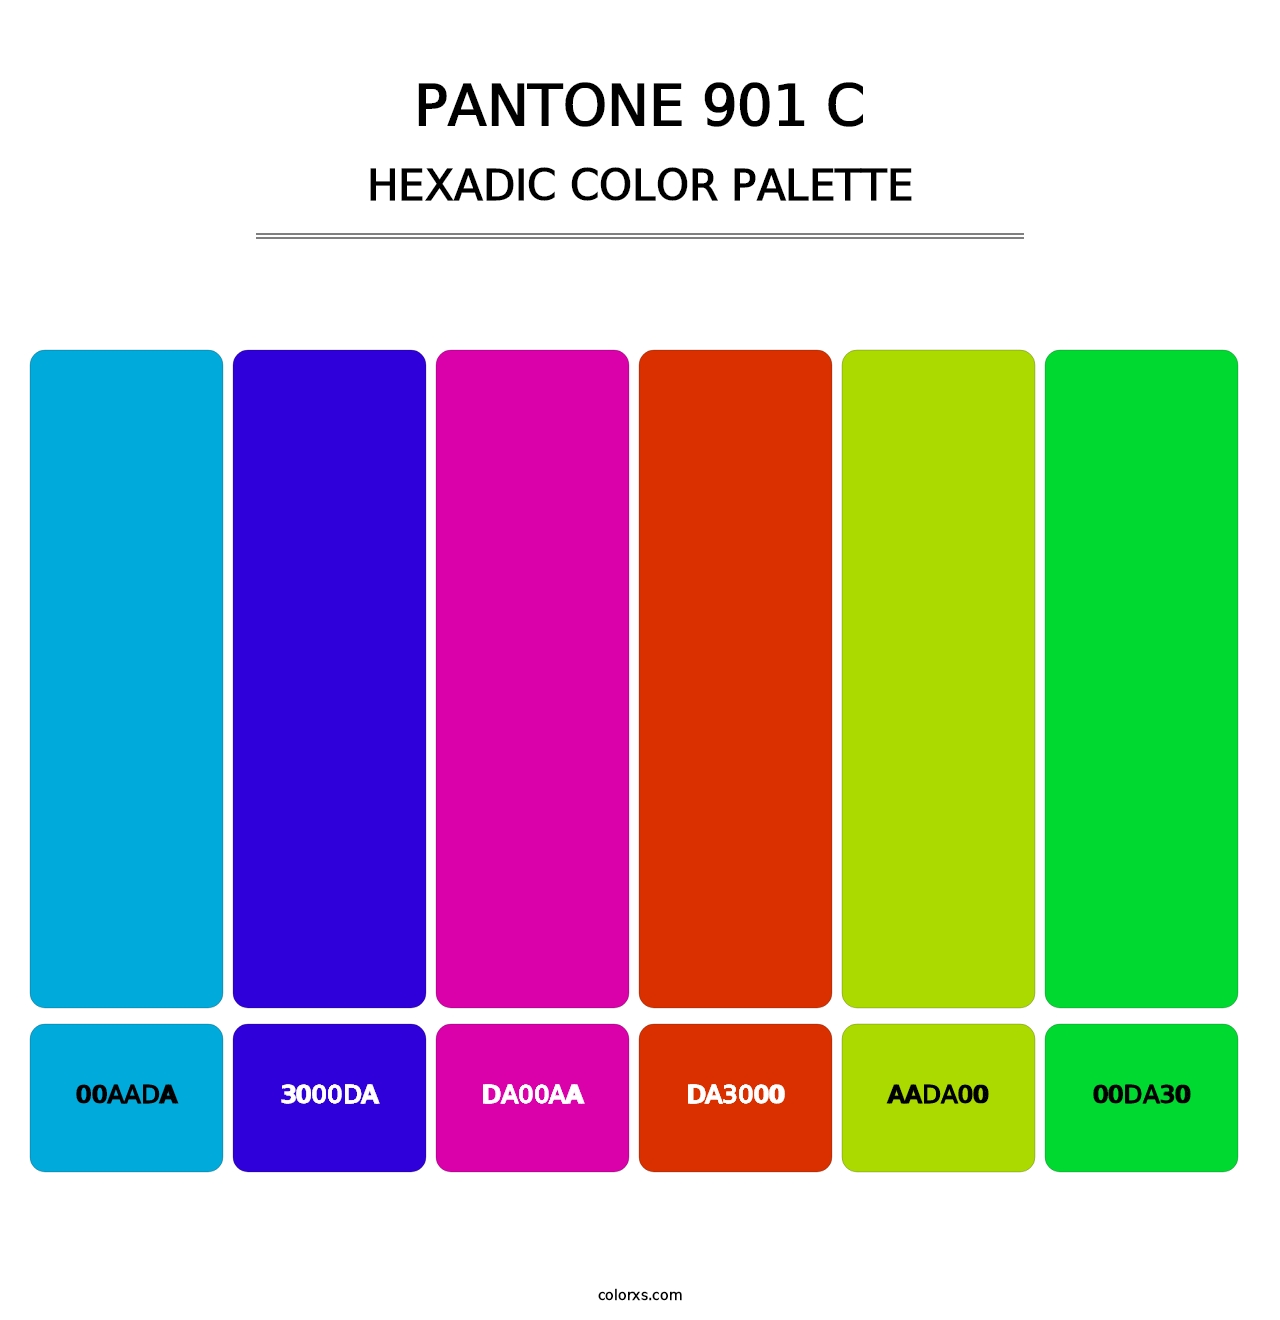 PANTONE 901 C - Hexadic Color Palette